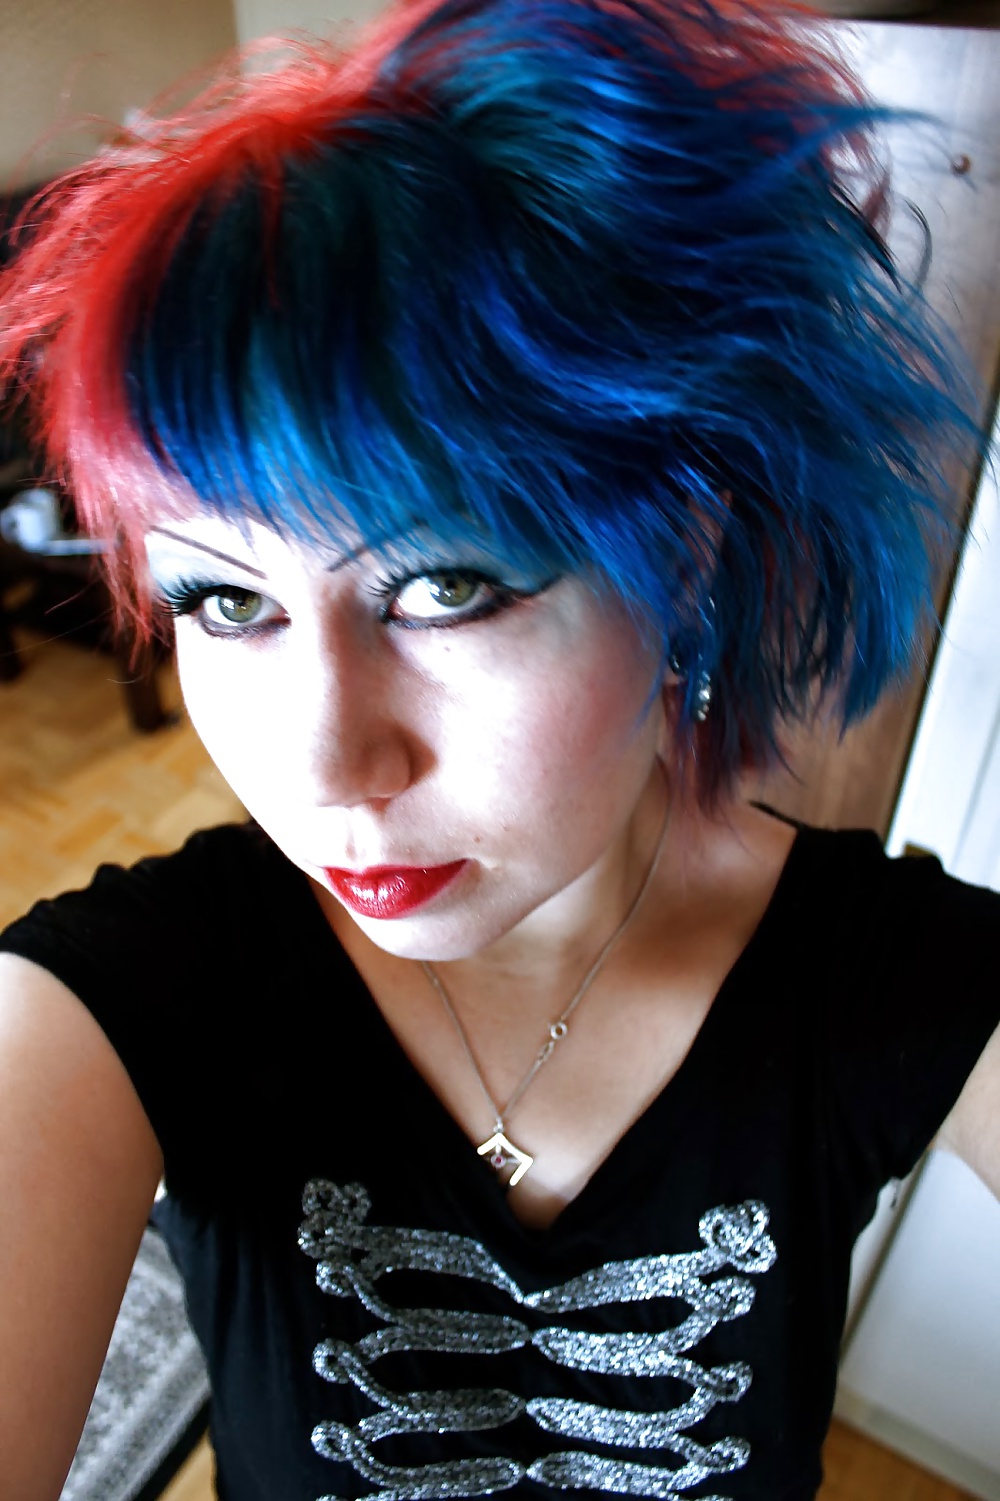 Gothic finnish blog girl #30152163